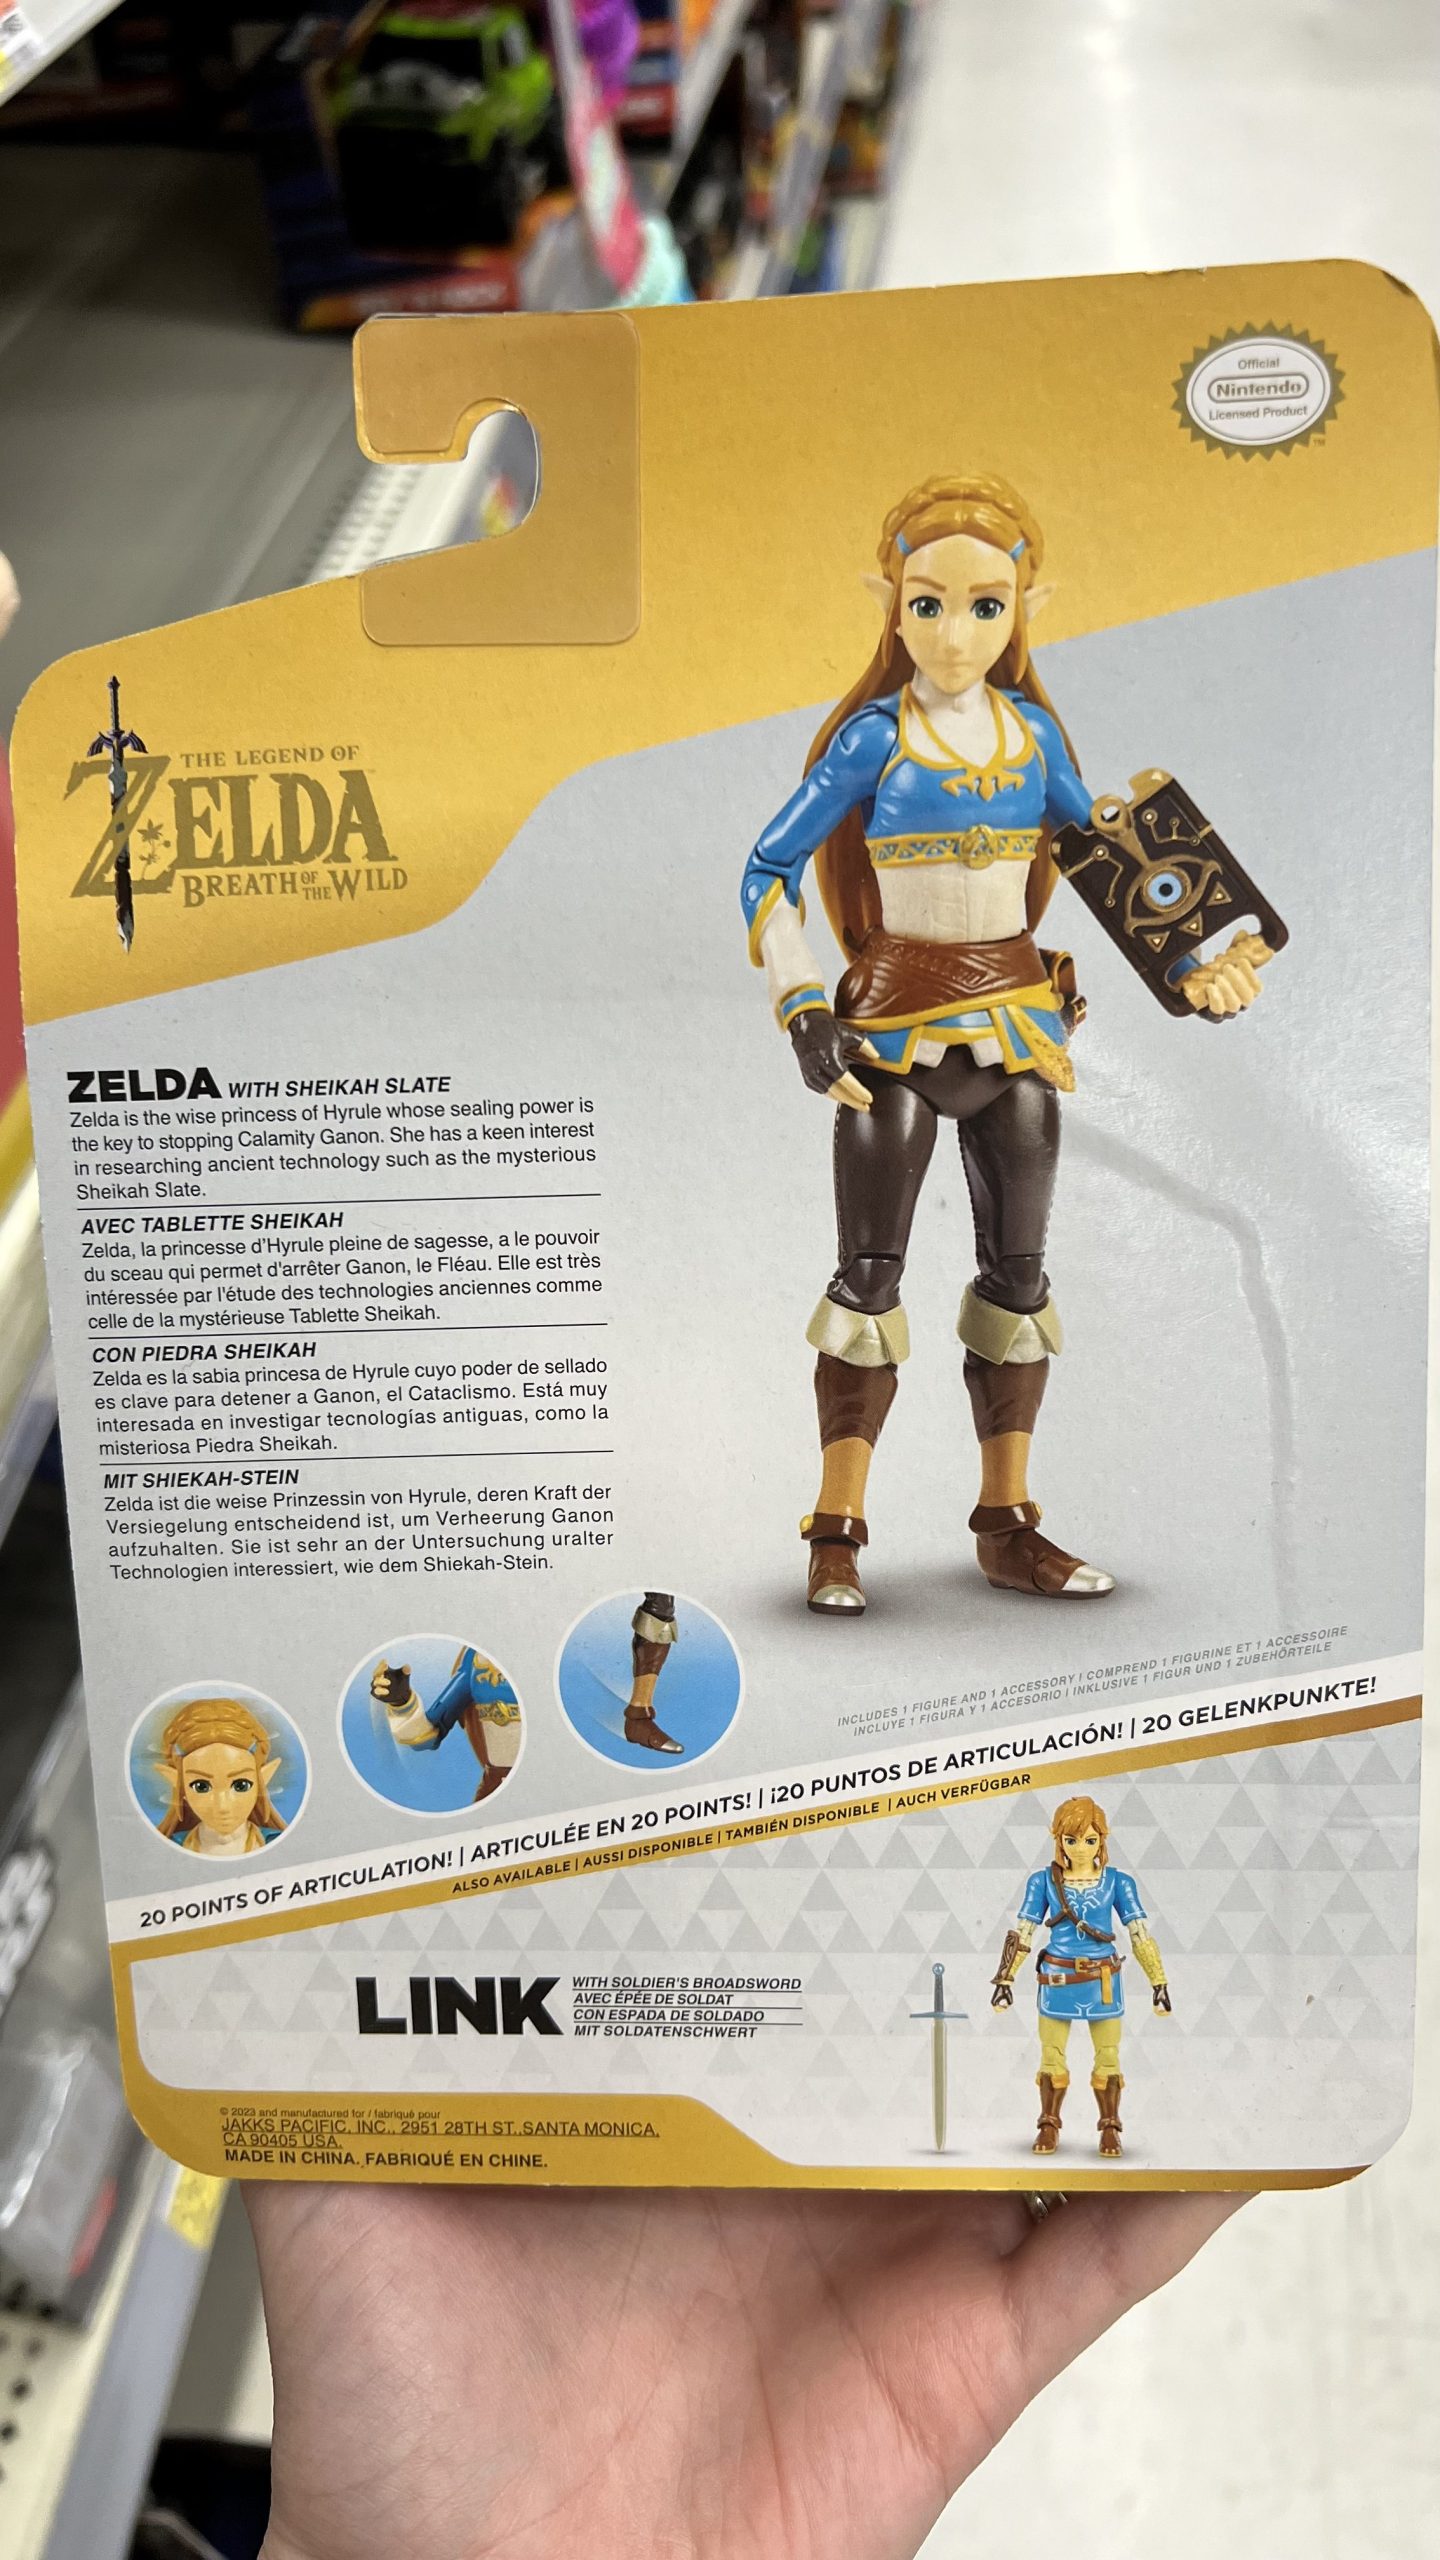 New Breath of the Wild Figures from Jakks Spotted at Walmart - Zelda Dungeon